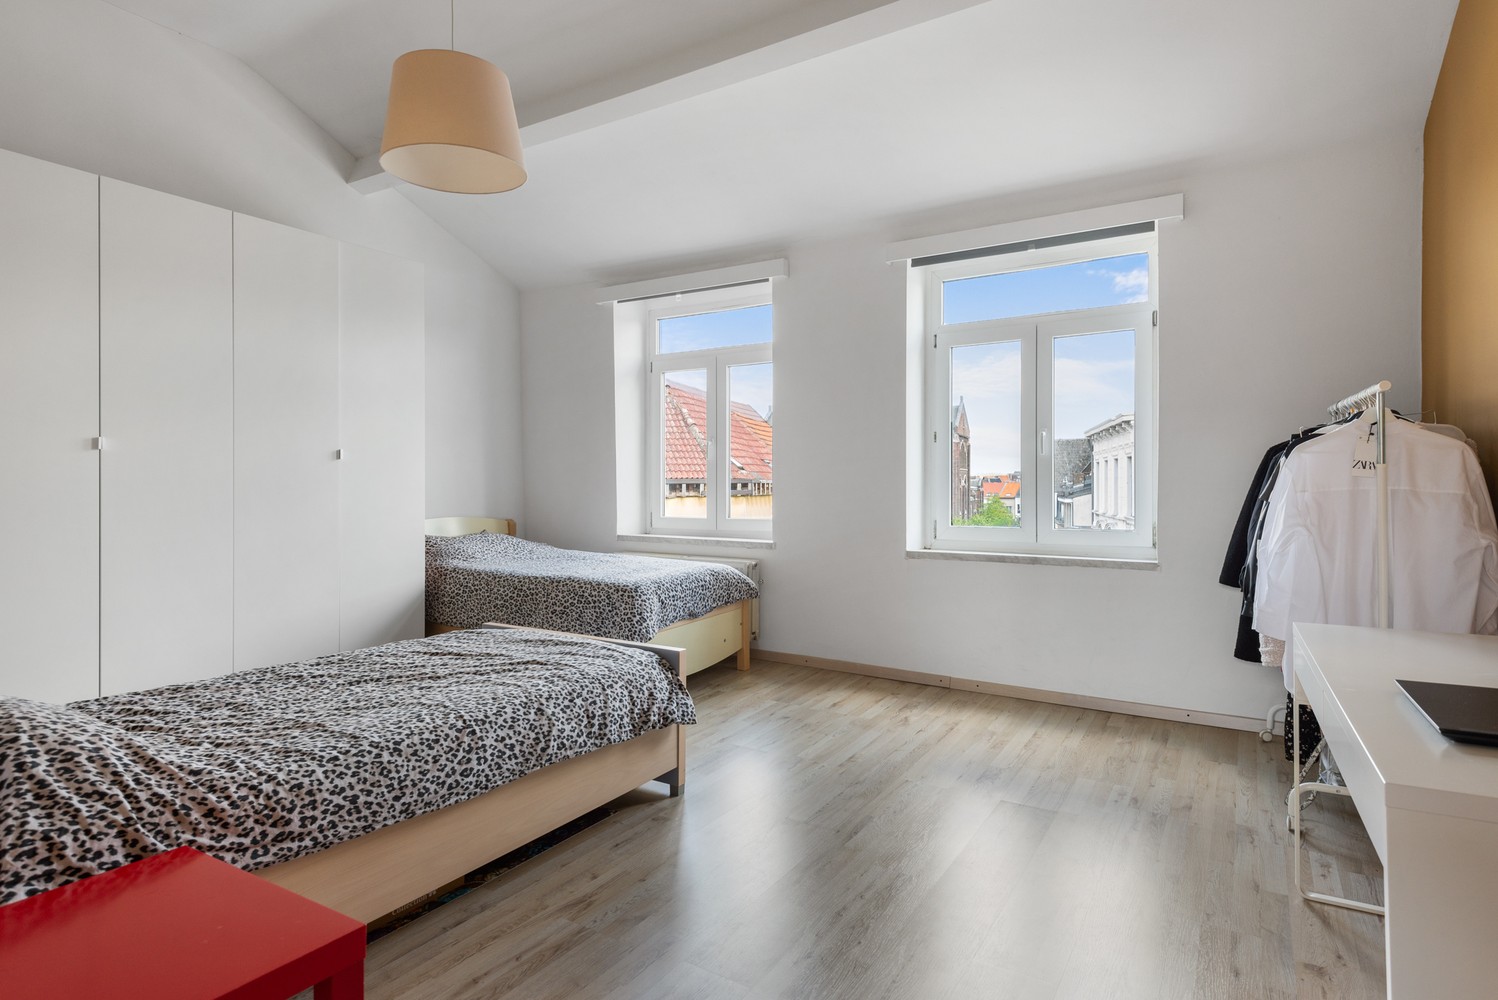 Ruime bel-étage met 5 slaapkamers & garage in Borgerhout! afbeelding 19